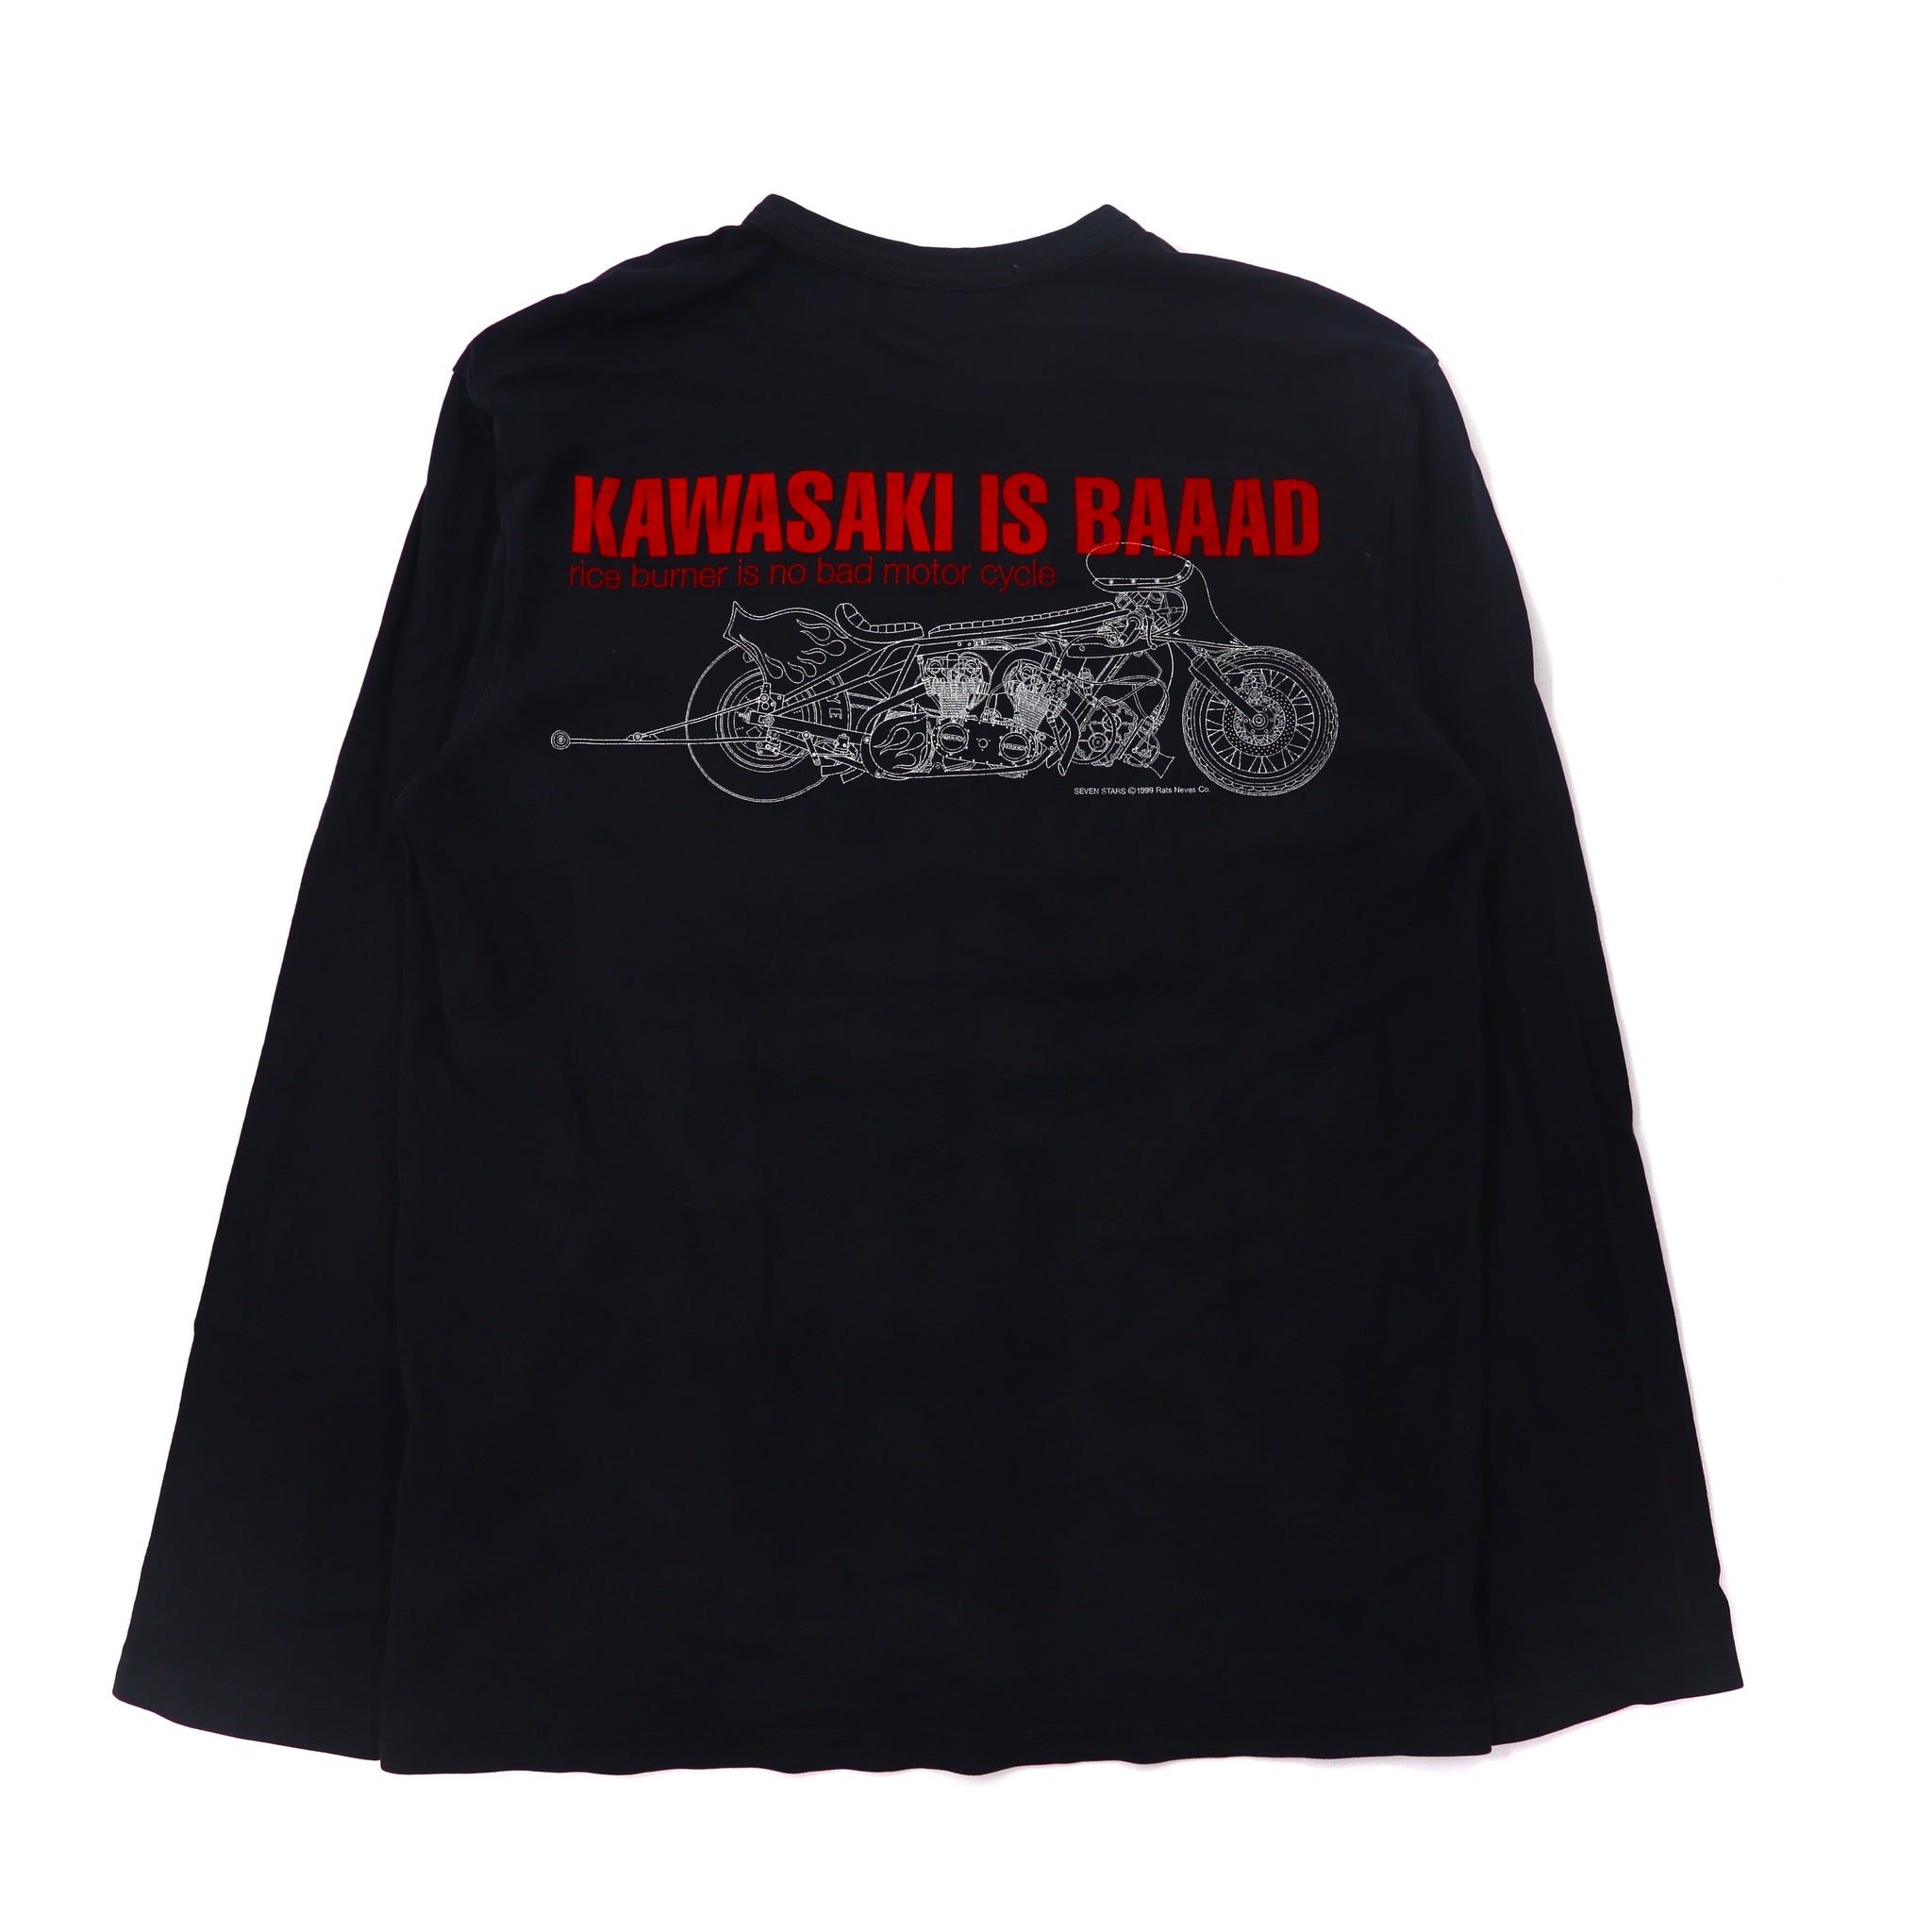 SOTQ ロングスリーブTシャツ L ブラック 川崎 kawasaki is BAAAD MOTORWN限定